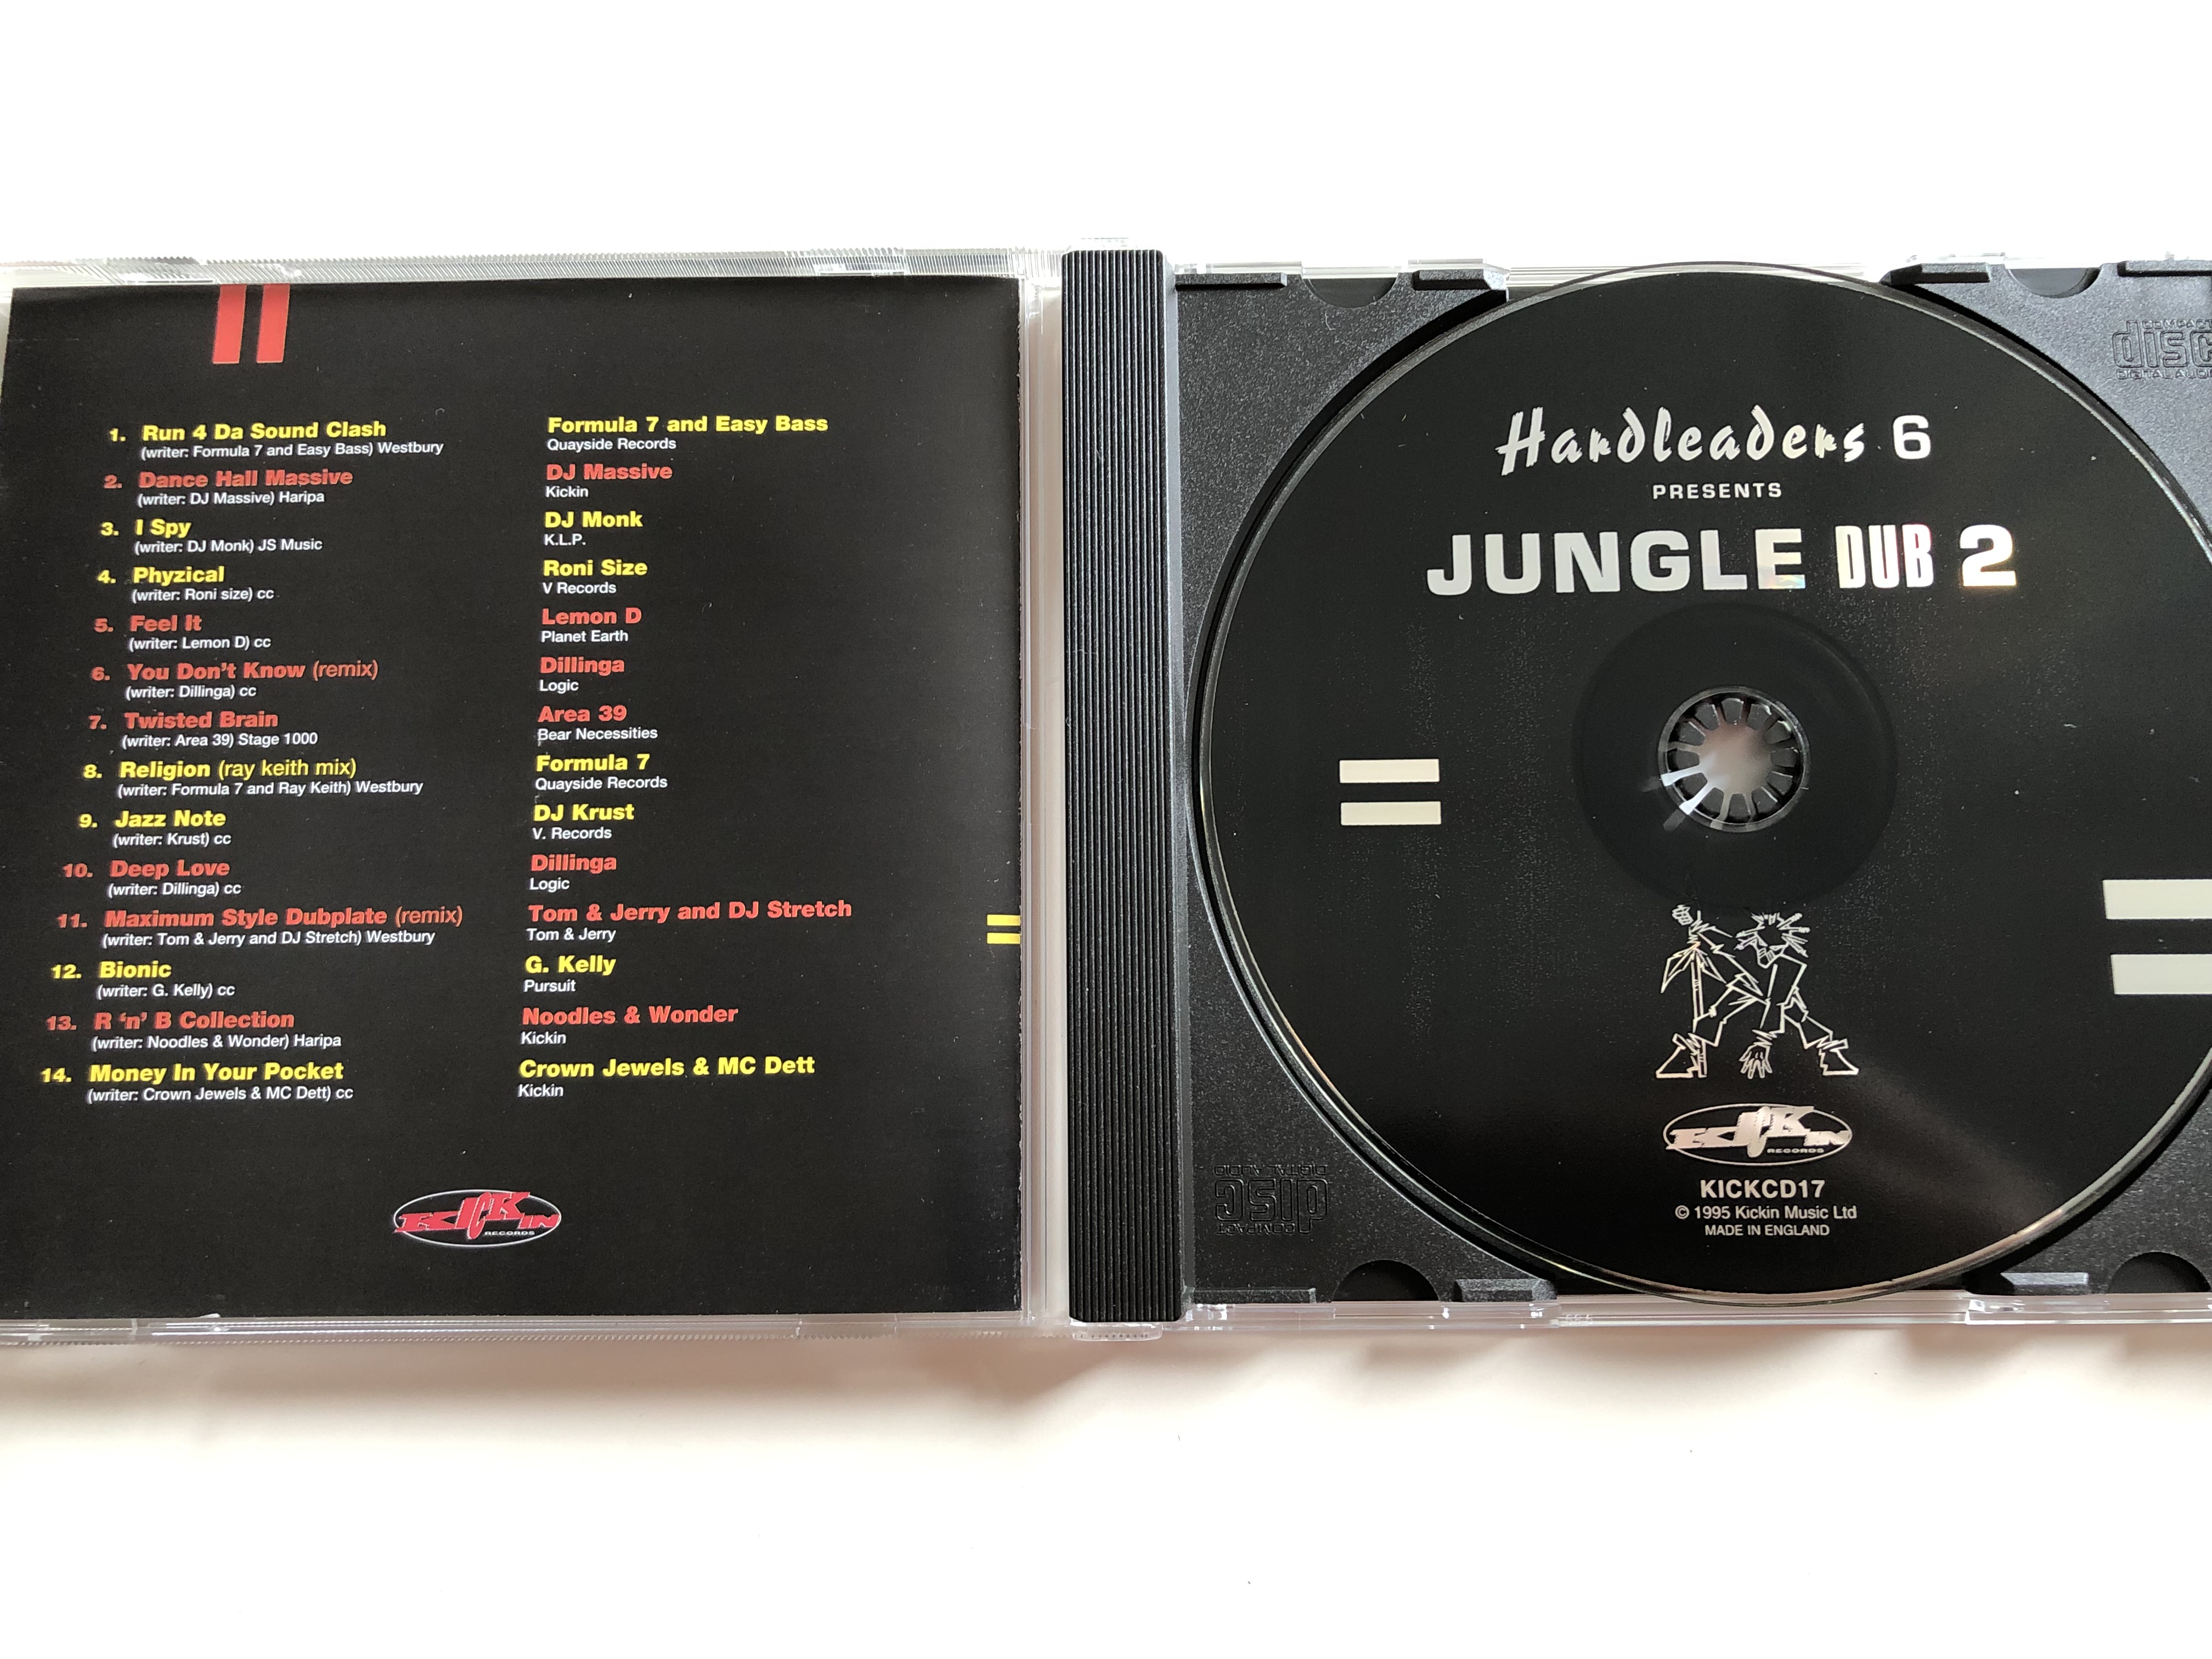 hardleaders-6-presents-jungle-dub-2-kickin-records-audio-cd-1995-kickcd17-4-.jpg